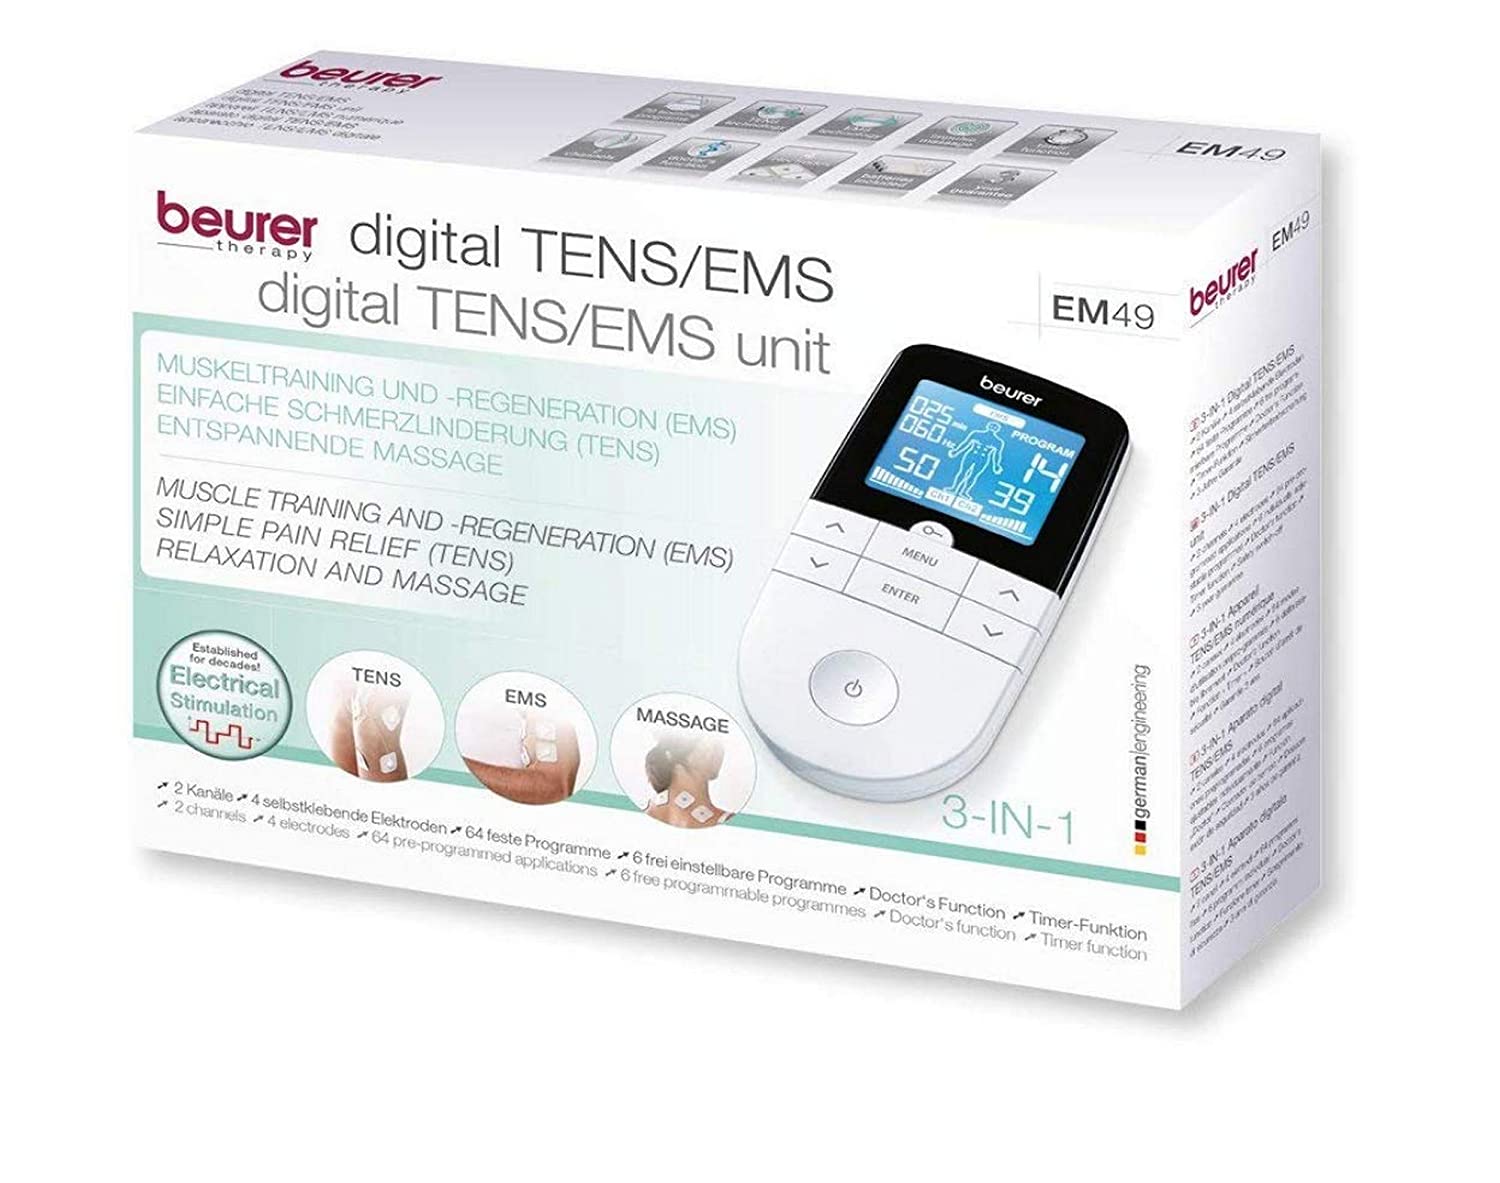 beurer Digital EMS/TENS unit Instructions